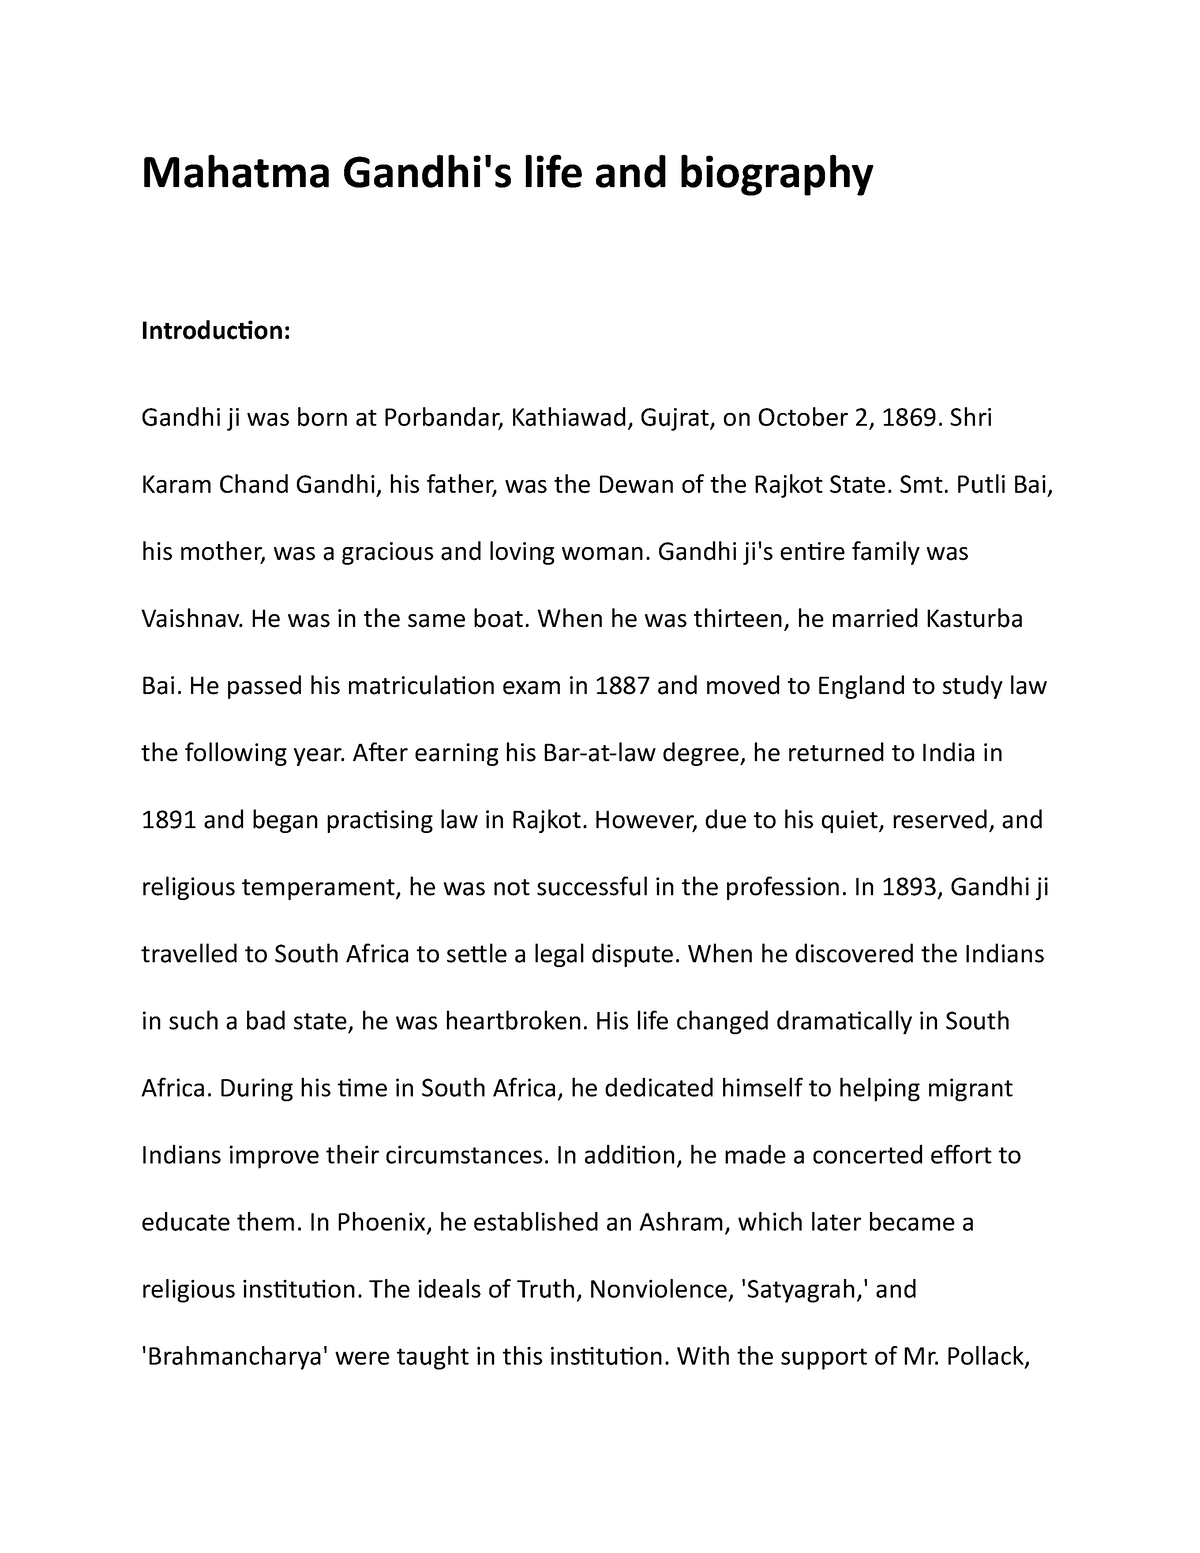 essay autobiography of mahatma gandhi